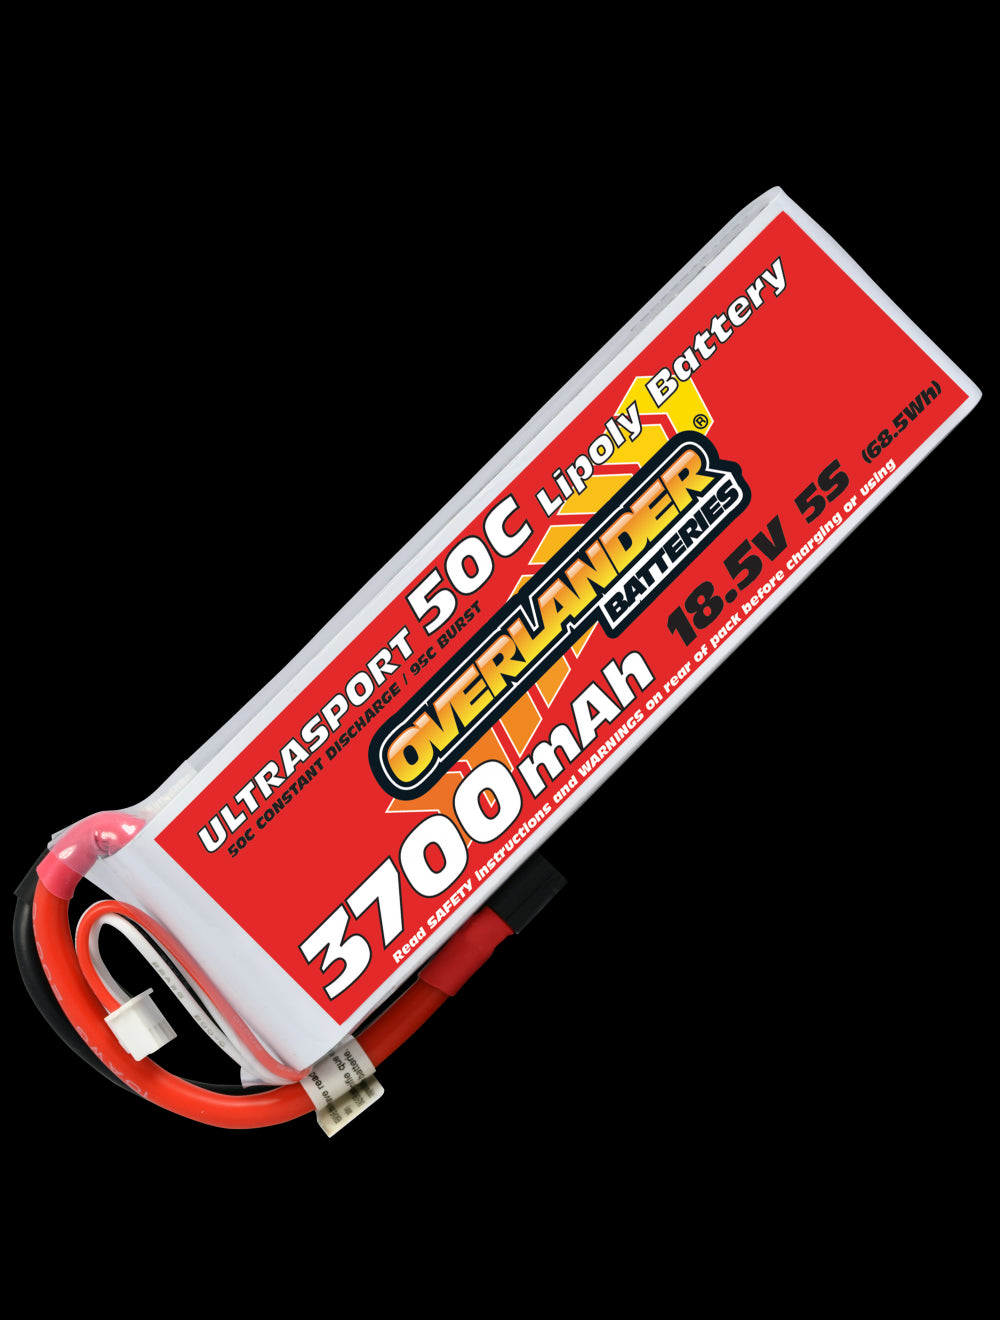 Overlander 3700mAh 18.5V 5S 50C Ultrasport LiPo Battery - Deans Connector 3225